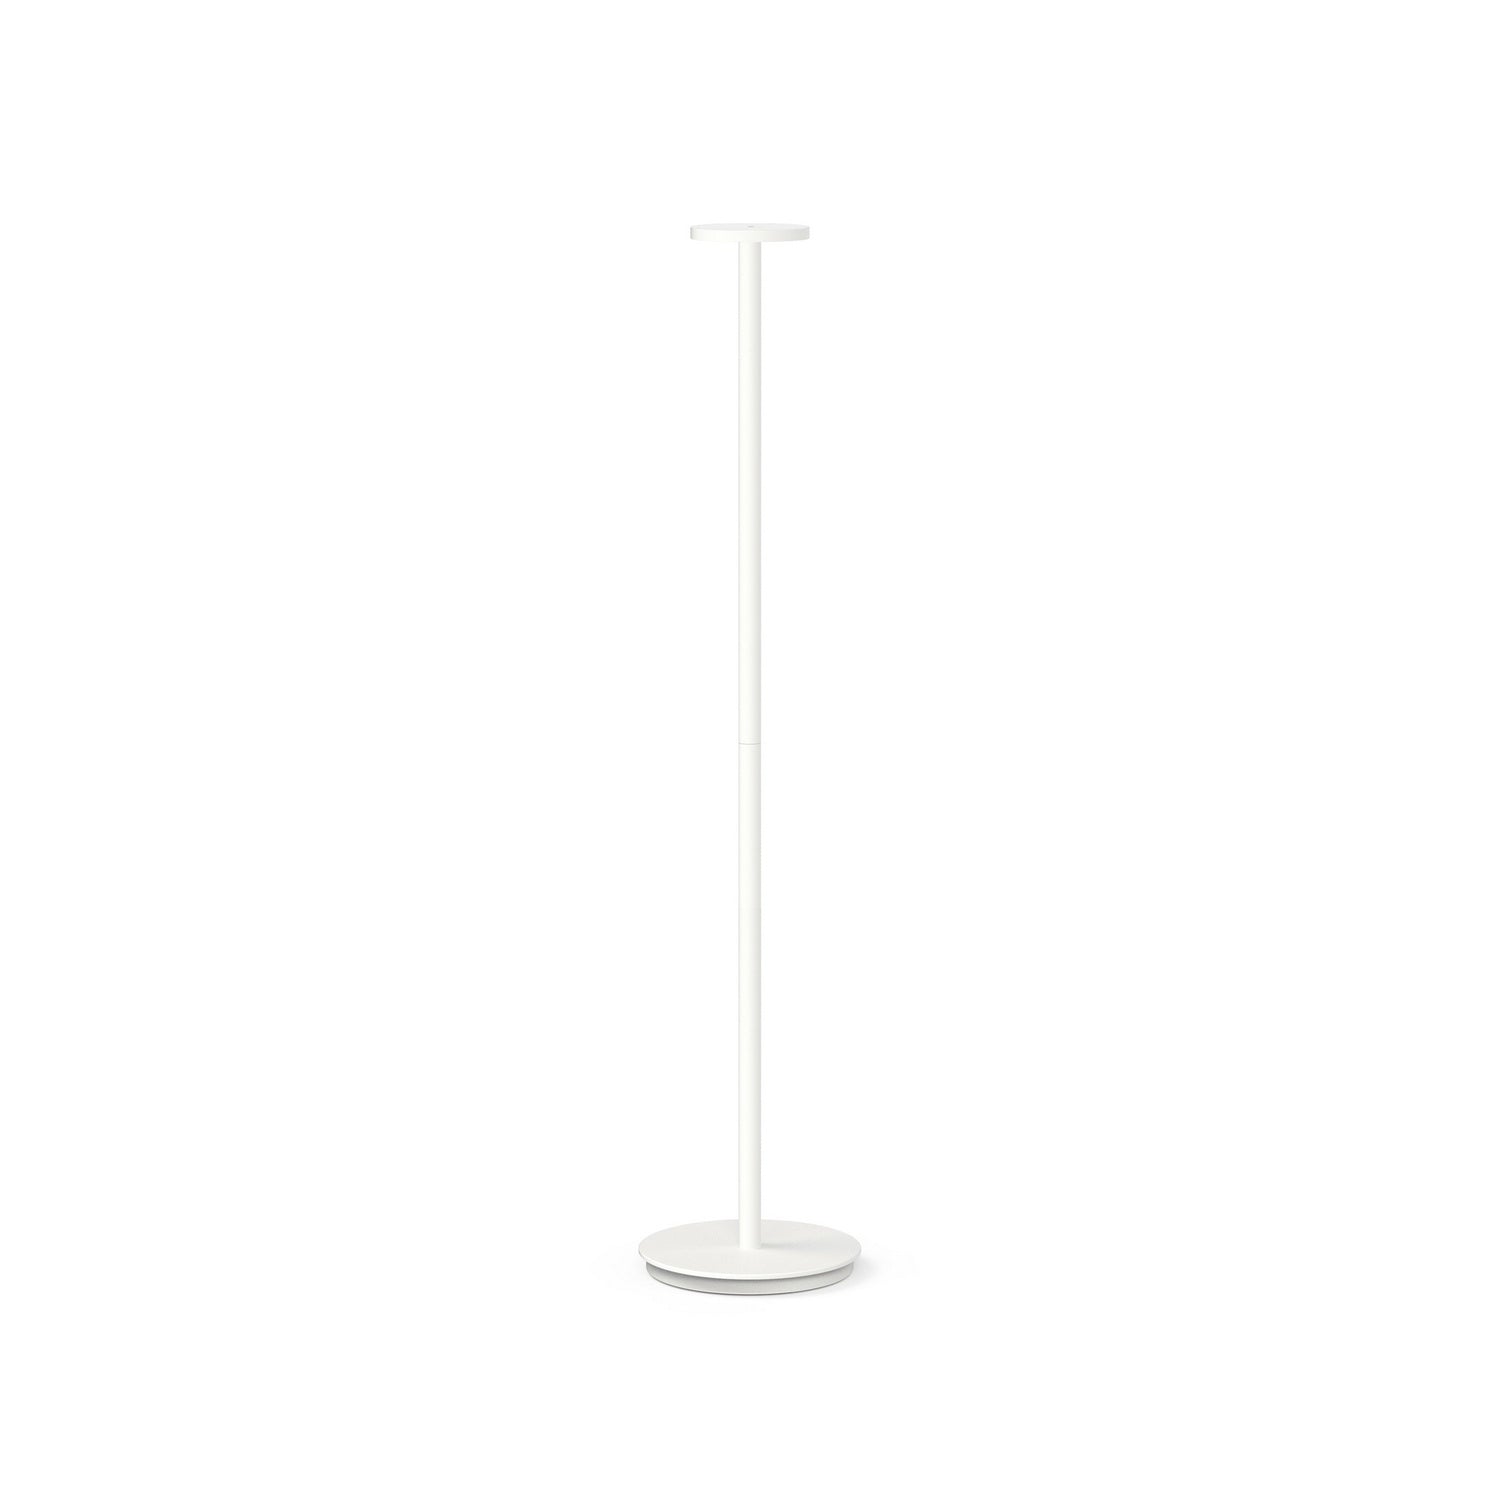 Pablo Designs - LED Floor Lamp - LUCI - White- Union Lighting Luminaires Decor